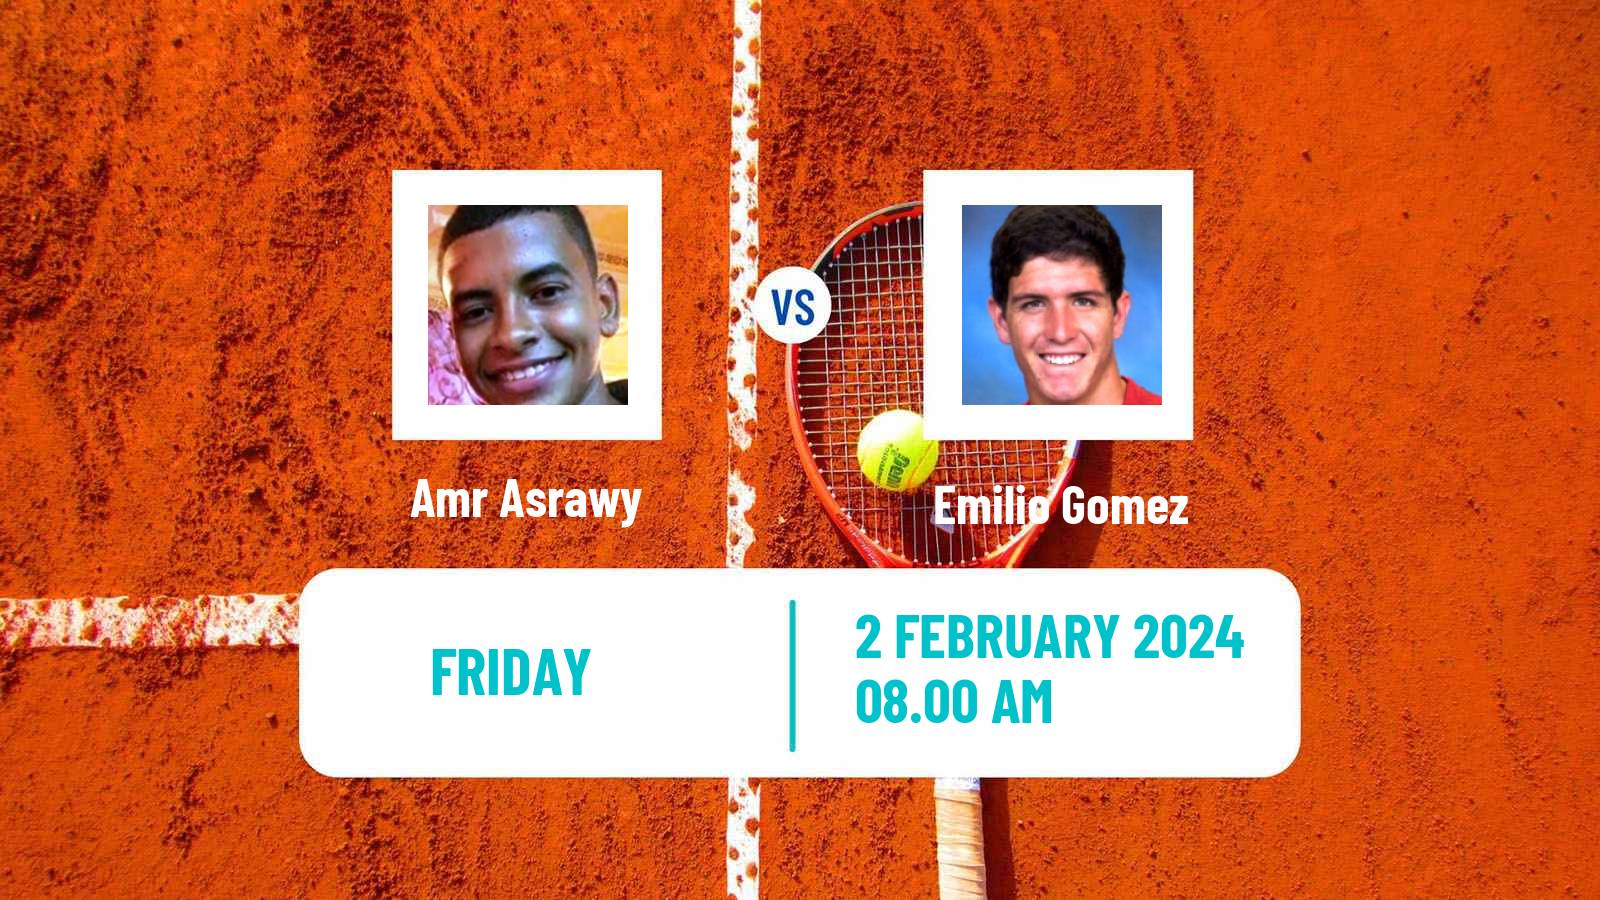 Tennis Davis Cup World Group I Amr Asrawy - Emilio Gomez